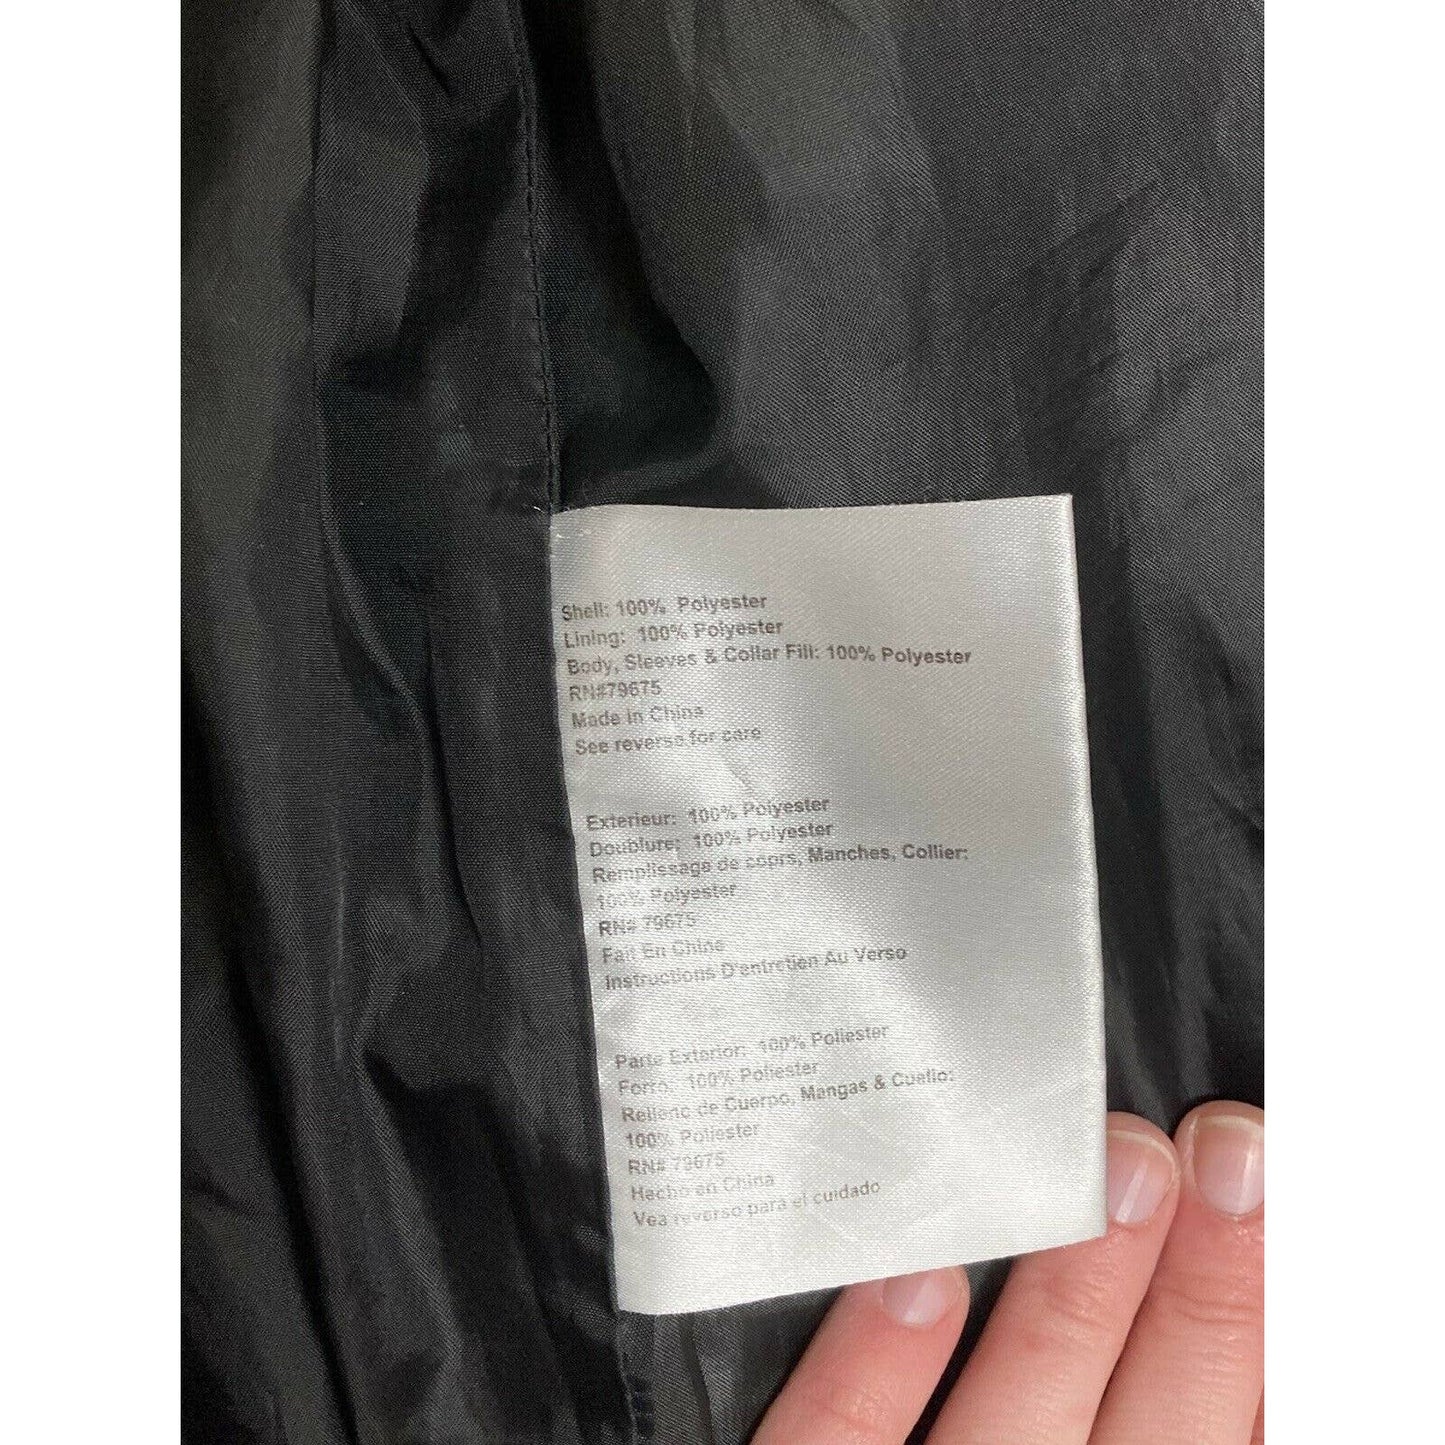 Michael Kors Quilted Jacket Coat Size XS Black Women’s Zippers Snaps